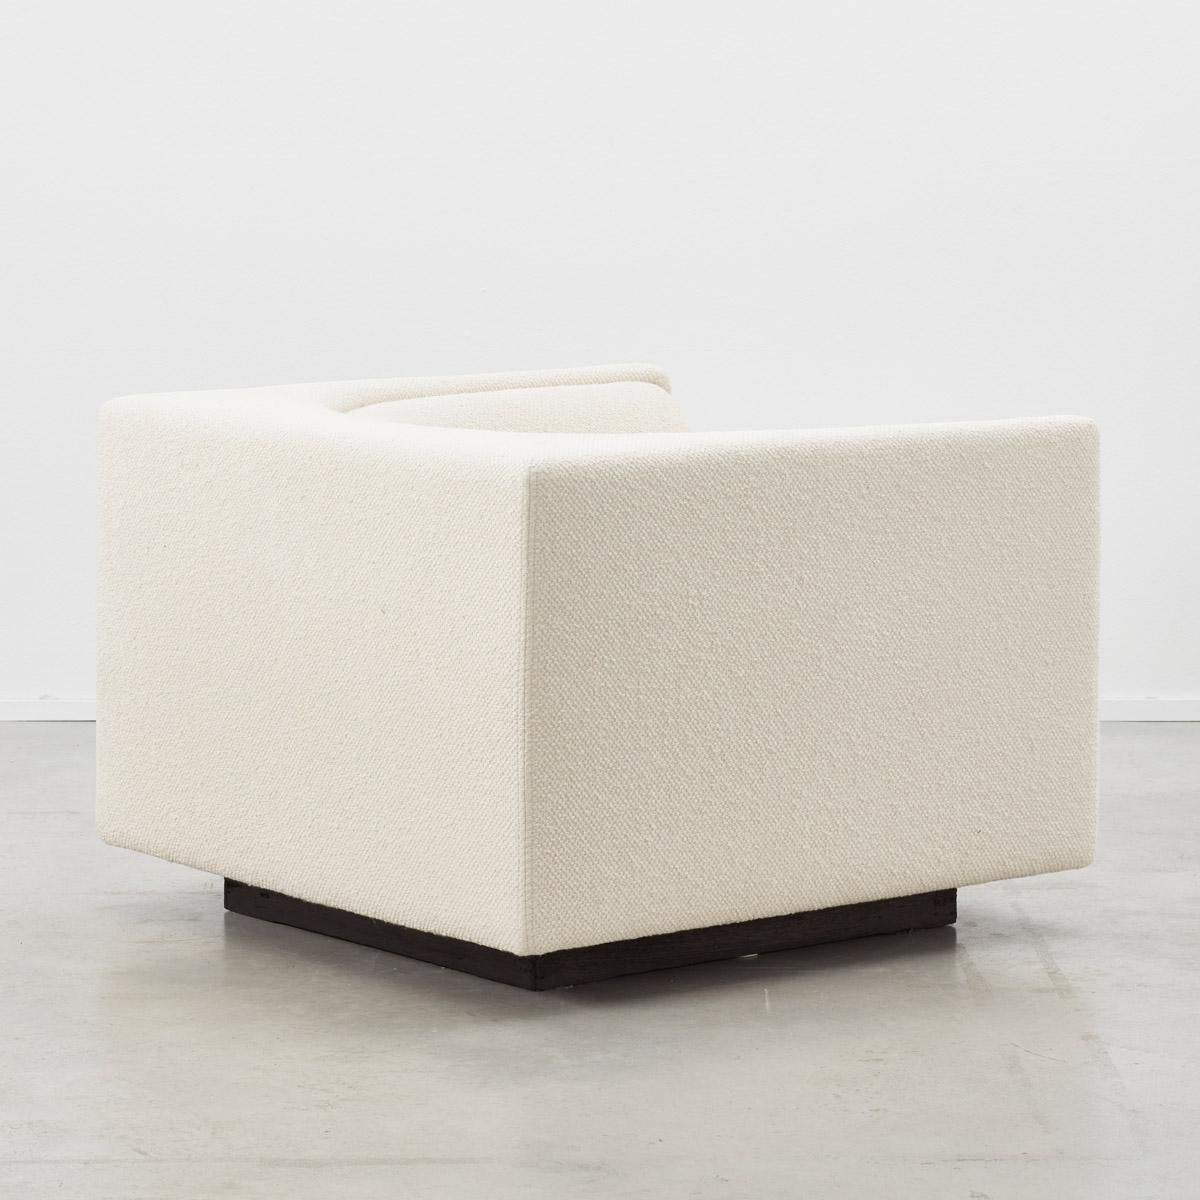 Wool Jorge Zalszupin Pair of Cubo Chairs L’Atelier Brazil, Brazil, 1970